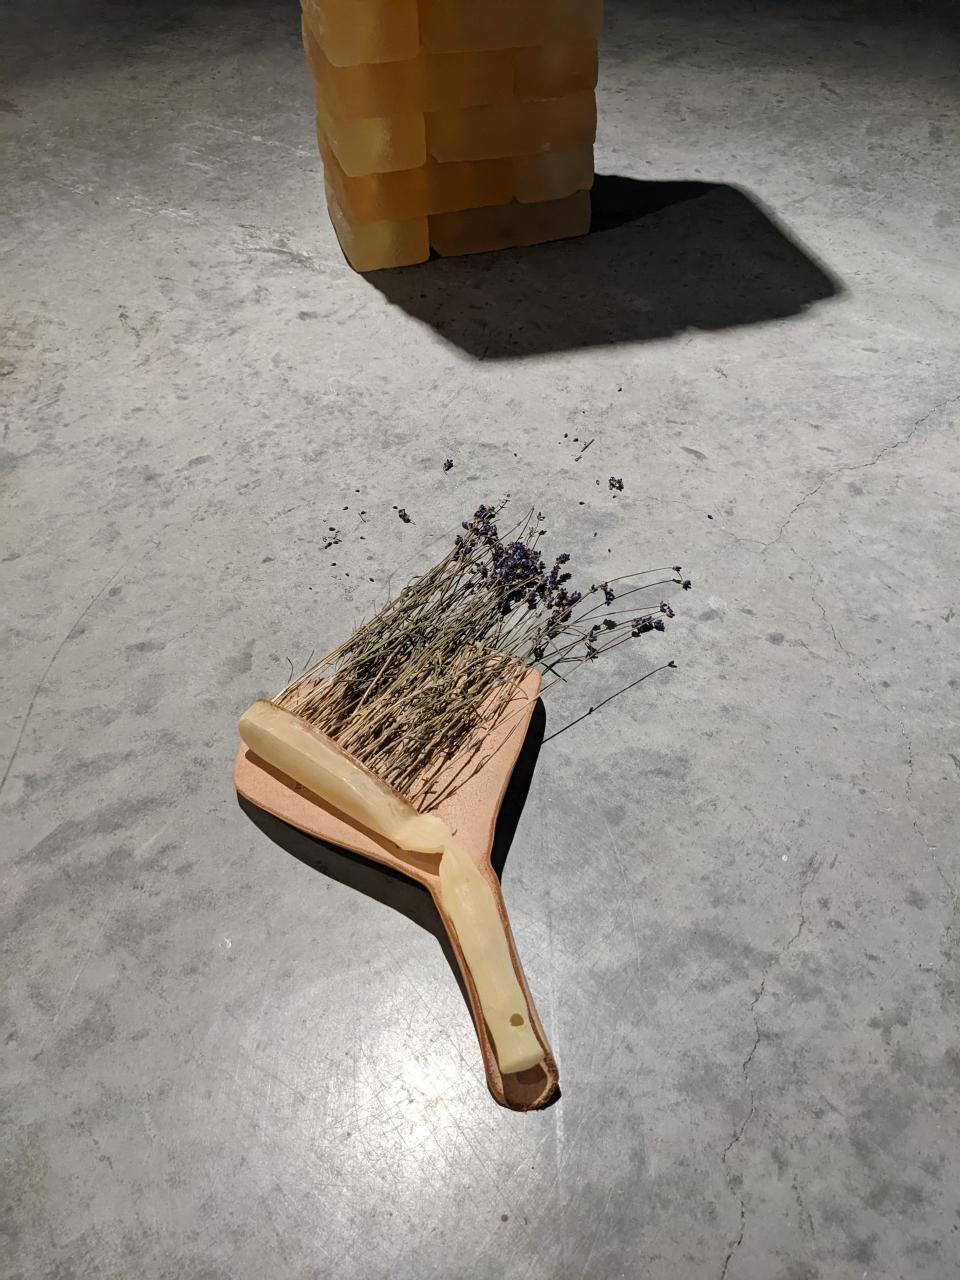 Patrick Moskwa. Dust Bin & Brush, 2020. Leather, latex, dried lavender. Photo Credit Patrick Moskwa.